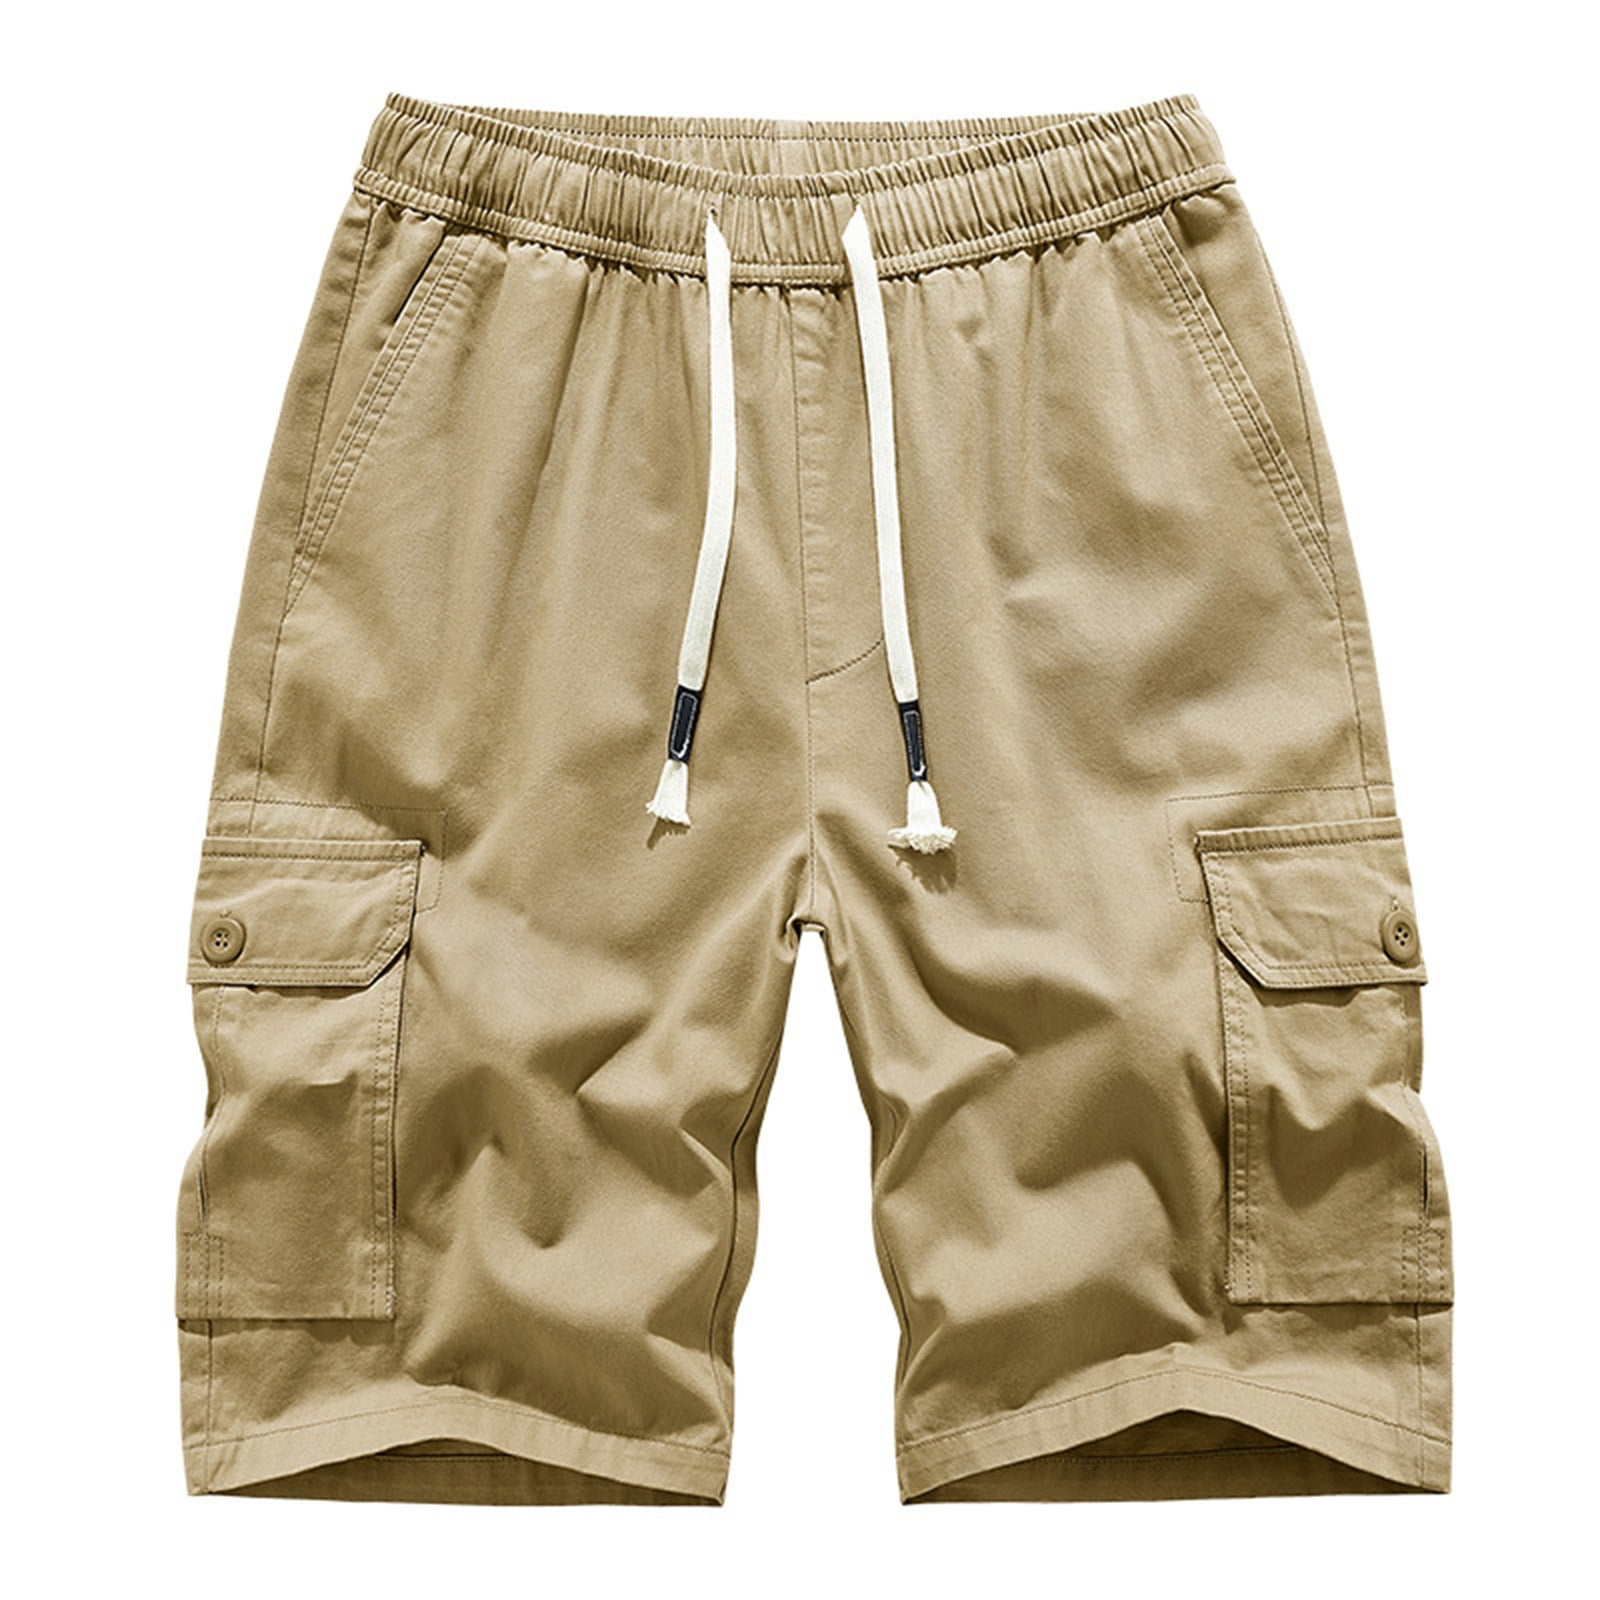 Reduce Price RYRJJ Men's Cargo Shorts Elastic Waist Drawstring Cotton  Summer Casual Outdoor Lightweight Multi-Pocket Work Short Pants(Khaki,4XL)  